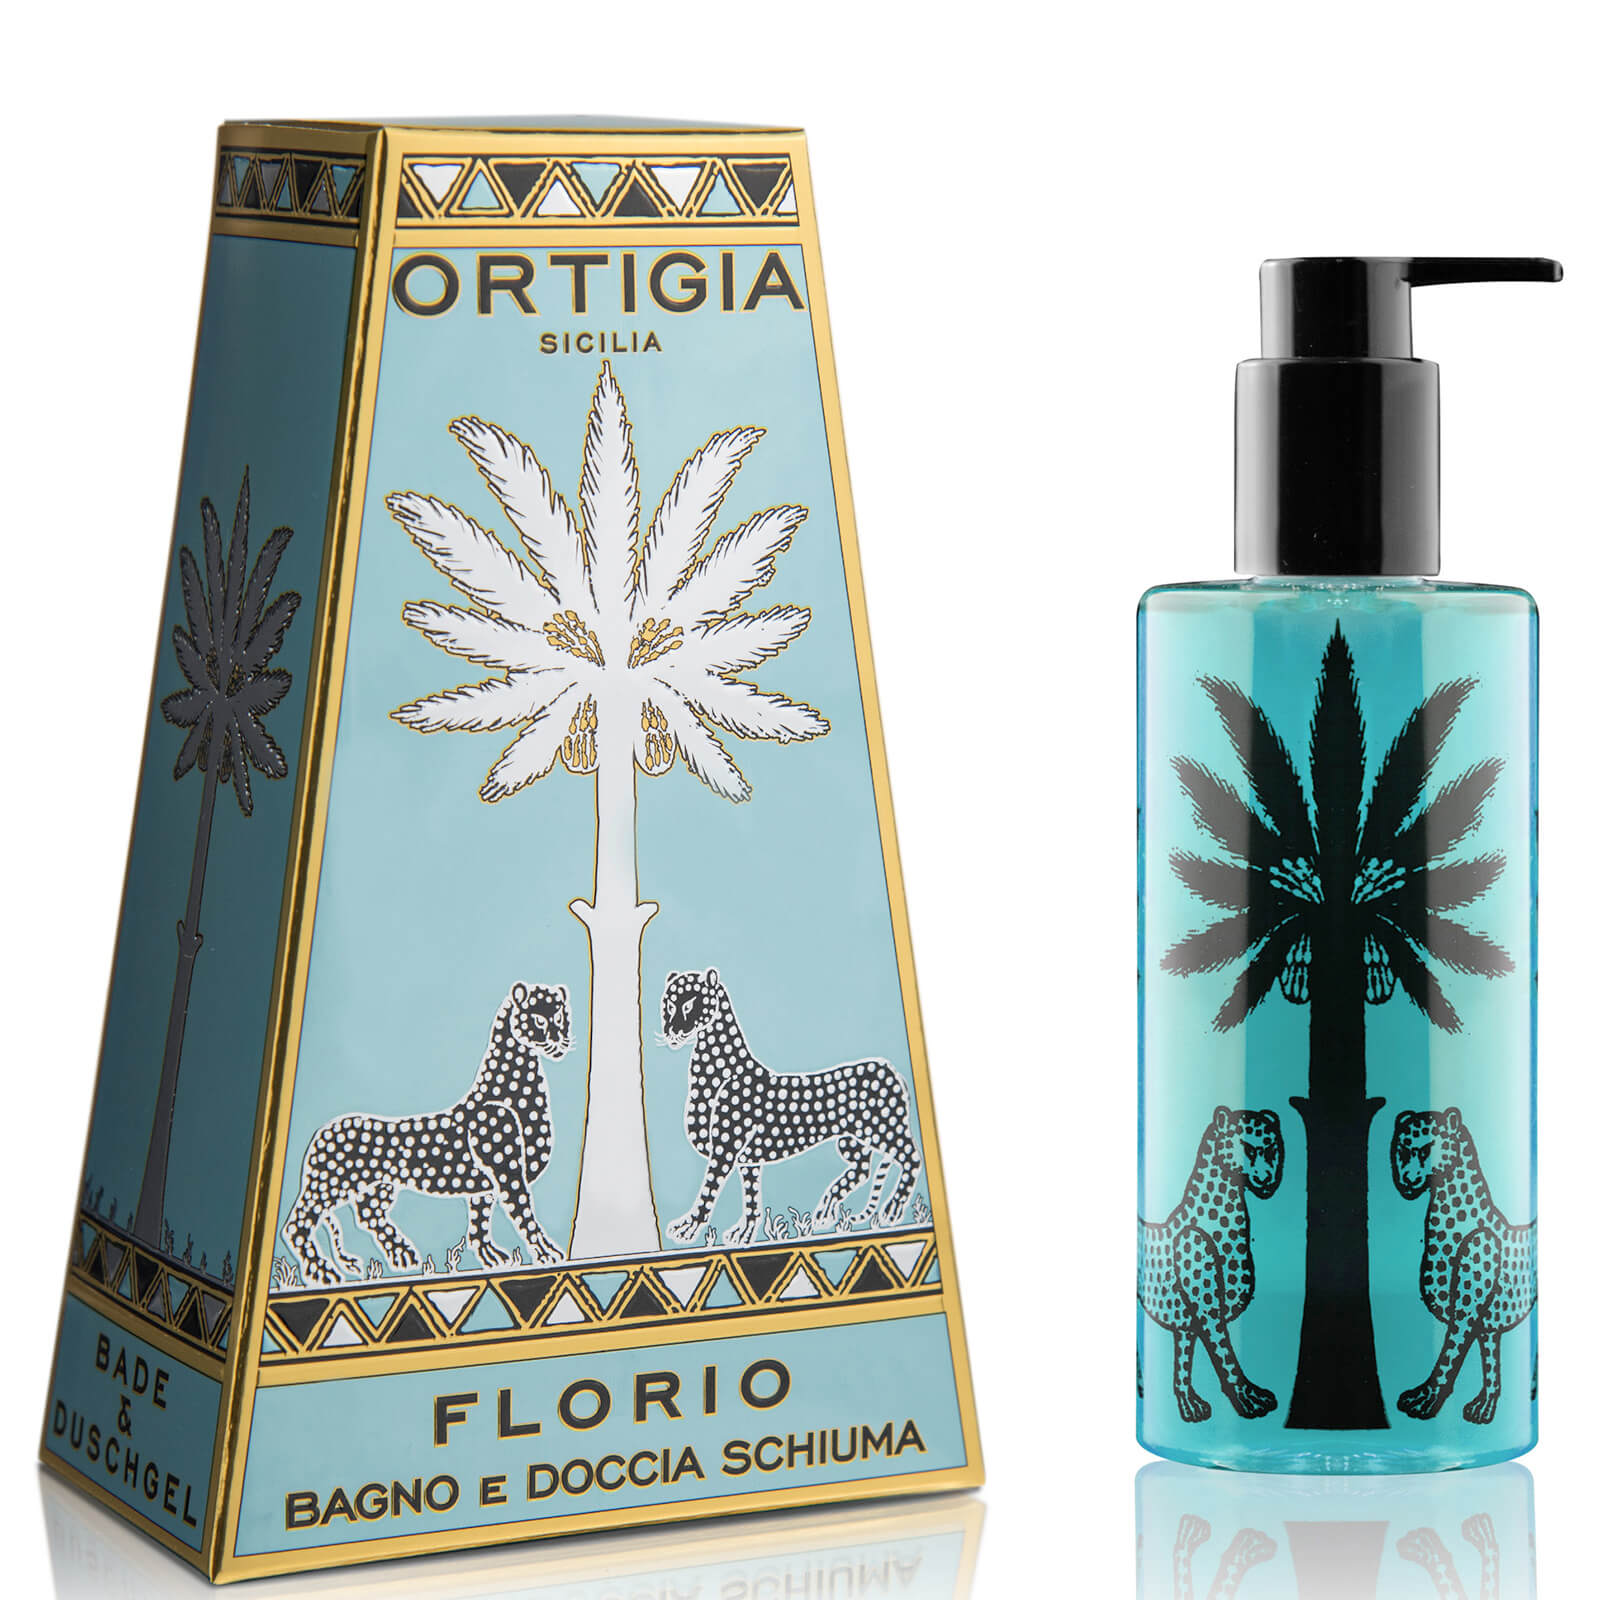 Shower gel Florio – PUTIA sicilian creativity